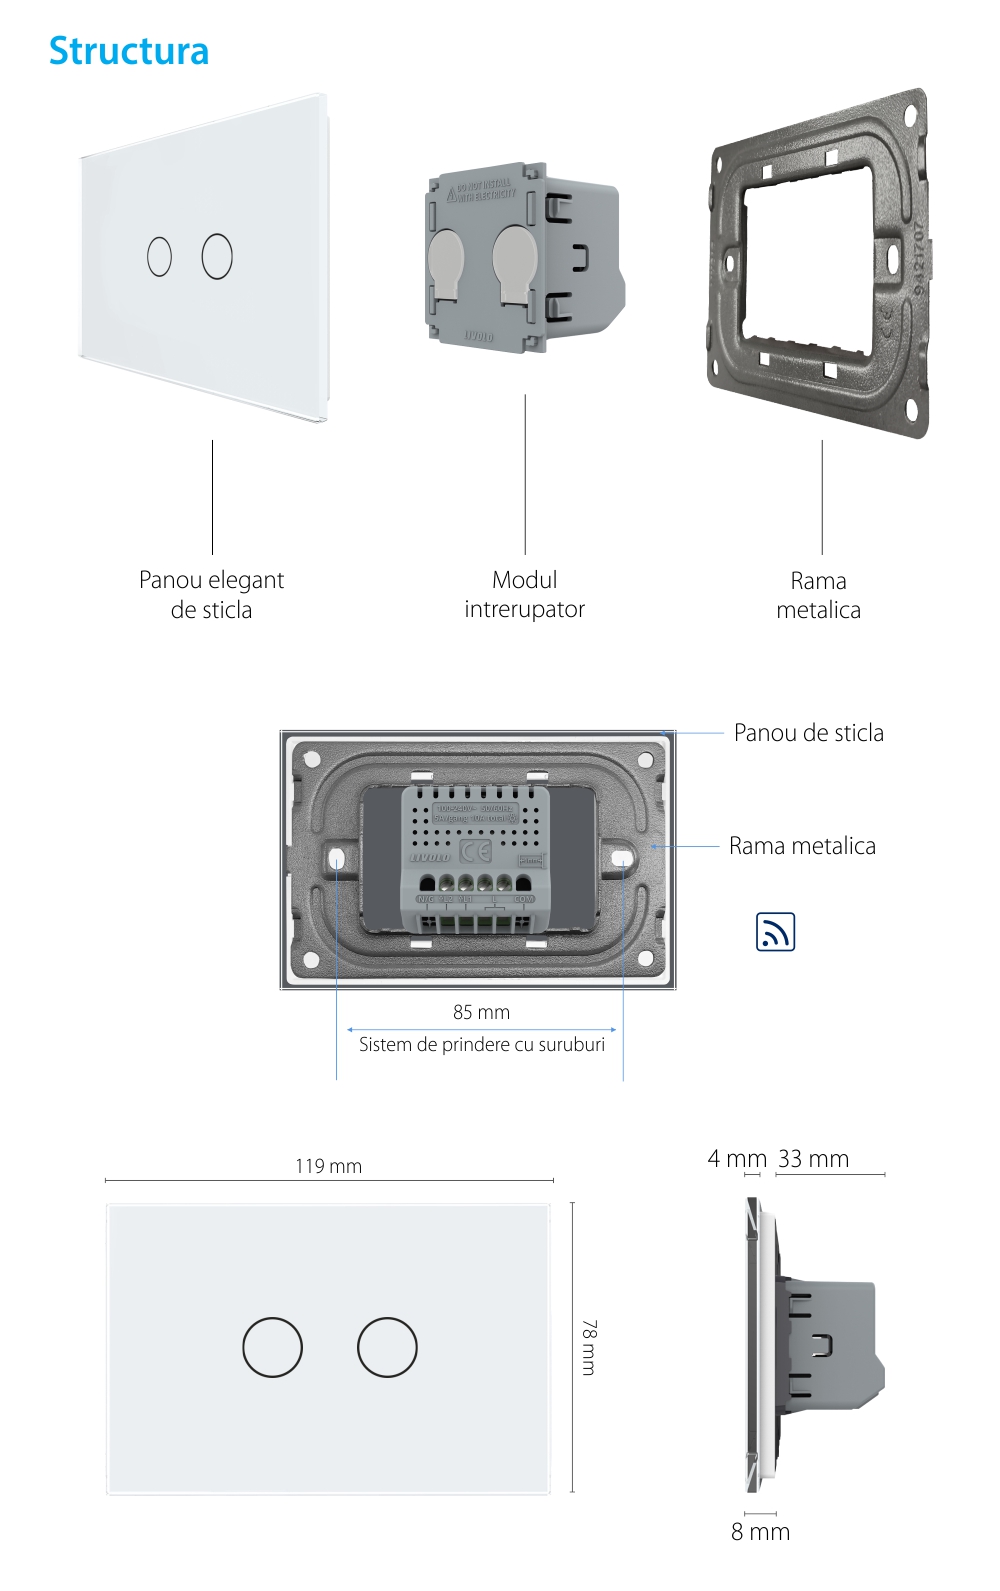 Intrerupator Dublu Wireless cu Touch LIVOLO din Sticla – Standard Italian